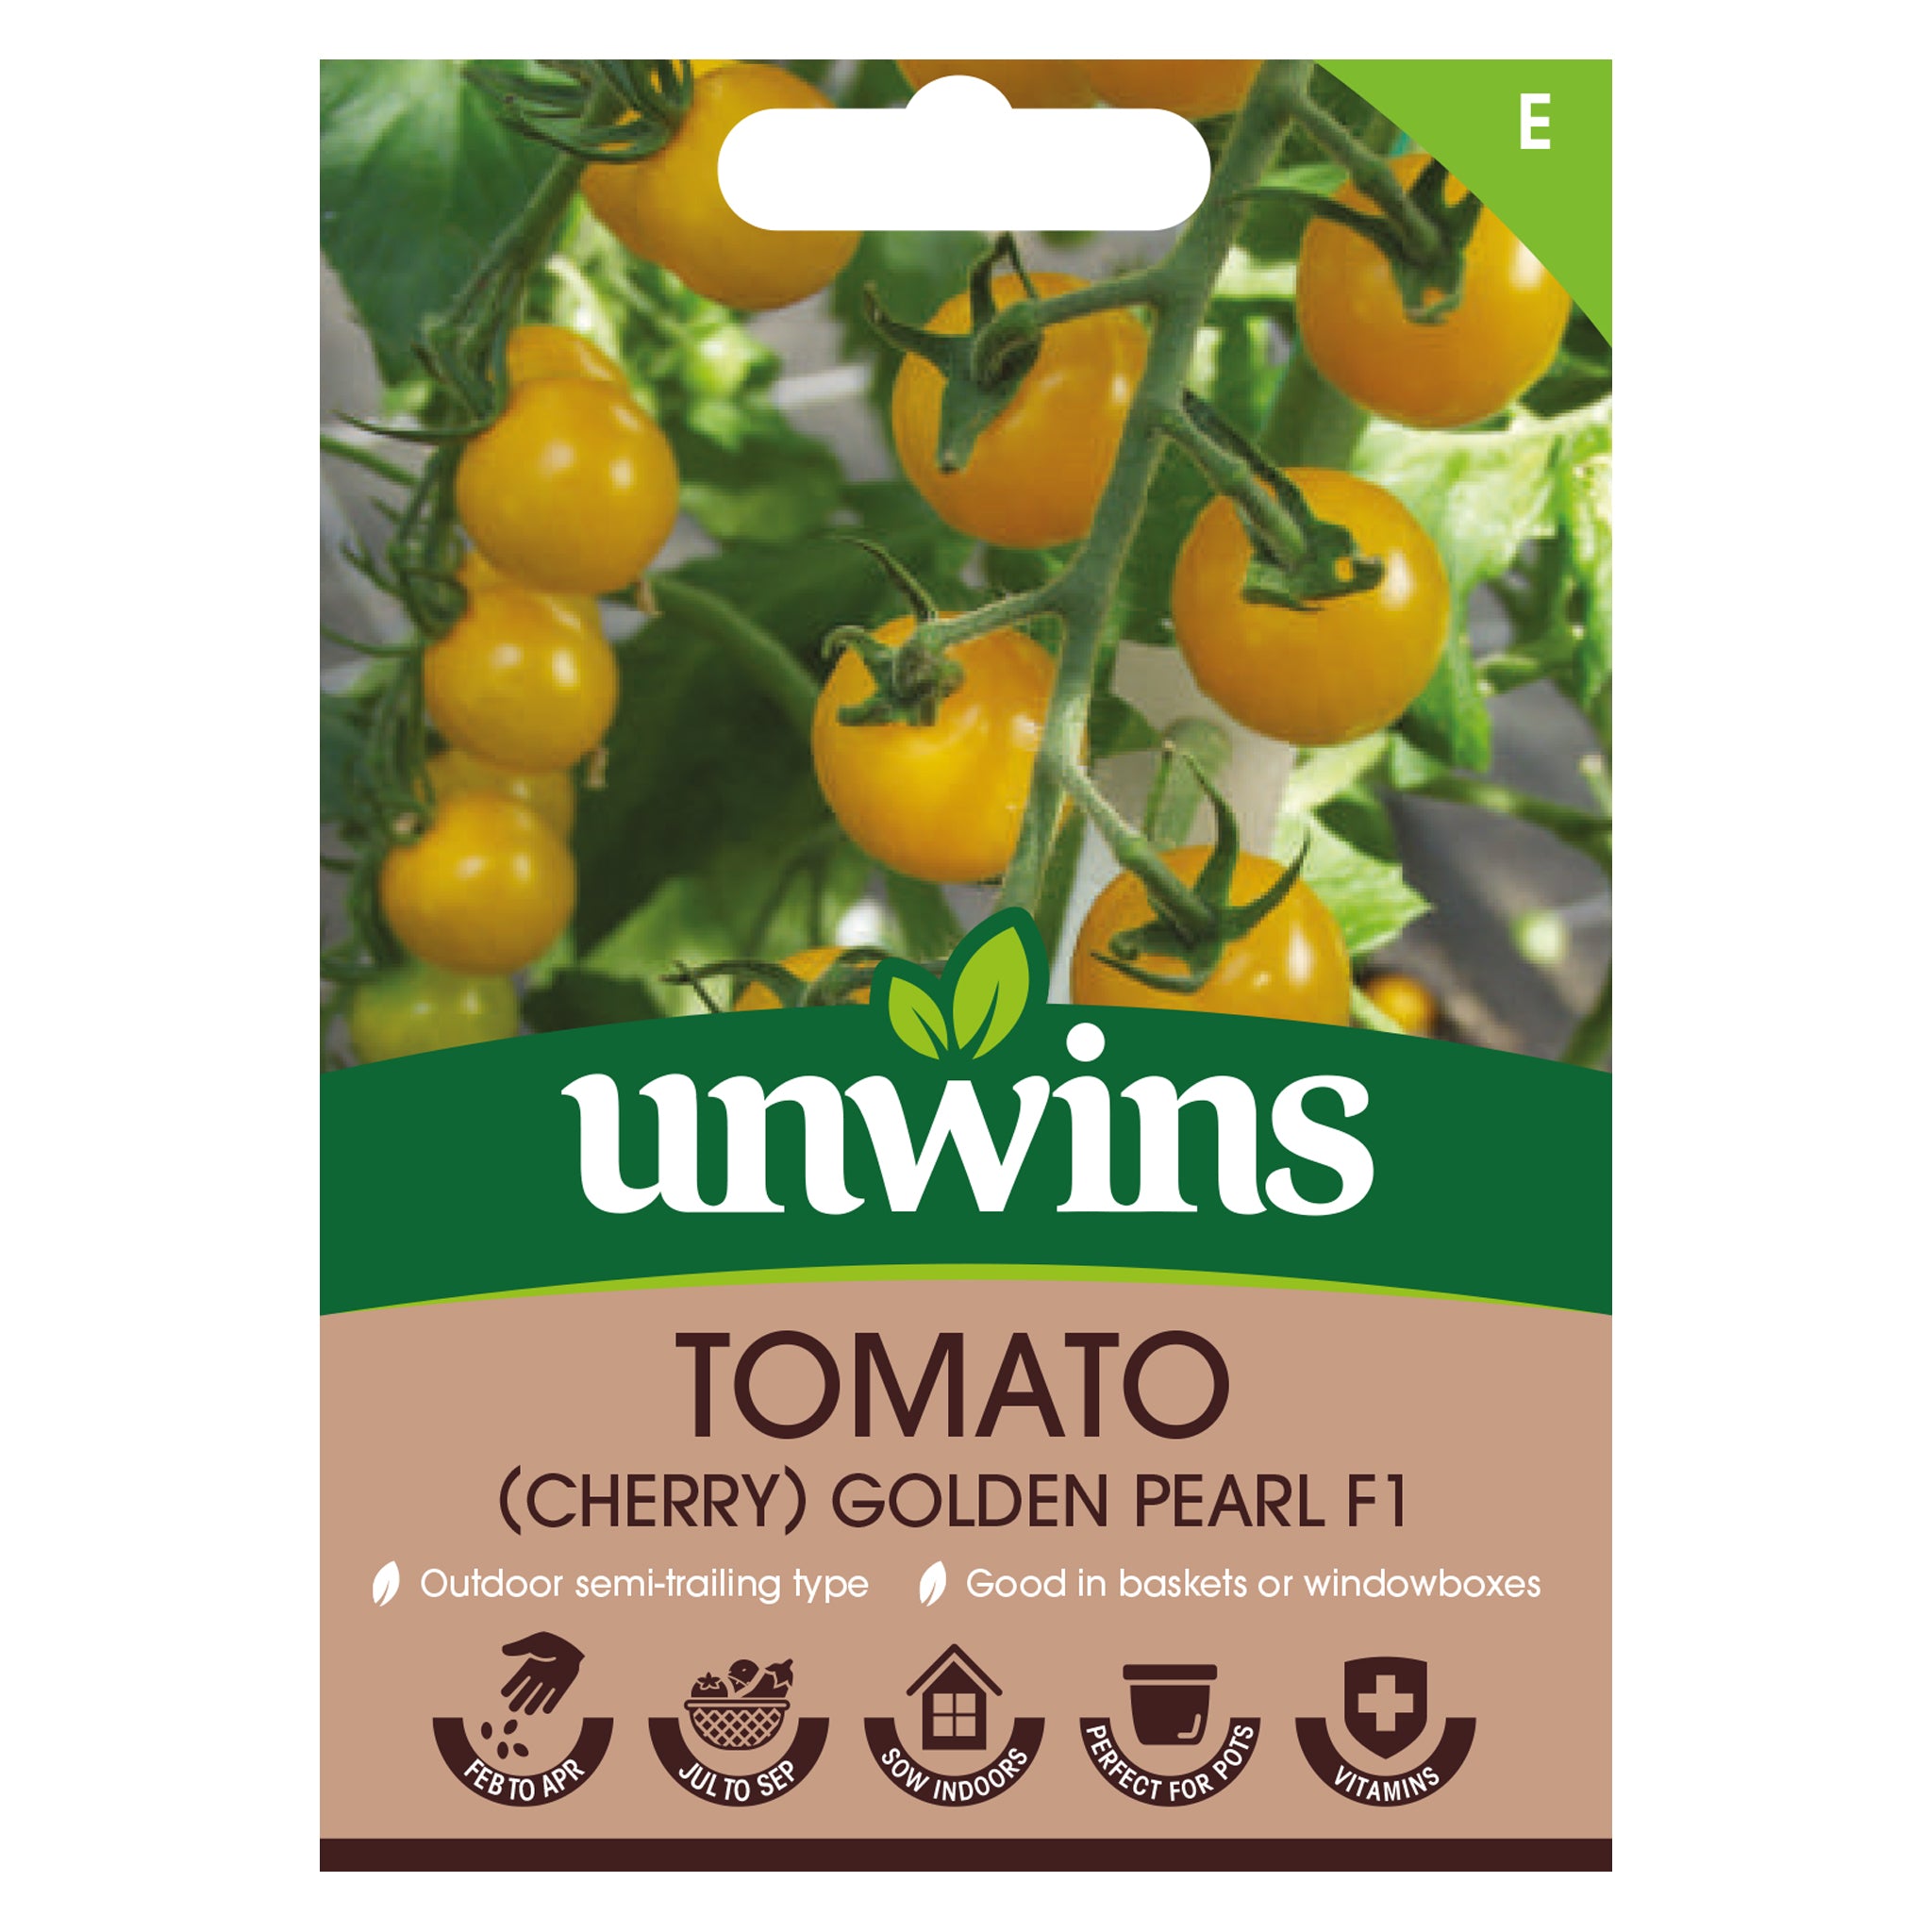 Unwins Cherry Tomato Golden Pearl F1 Seeds